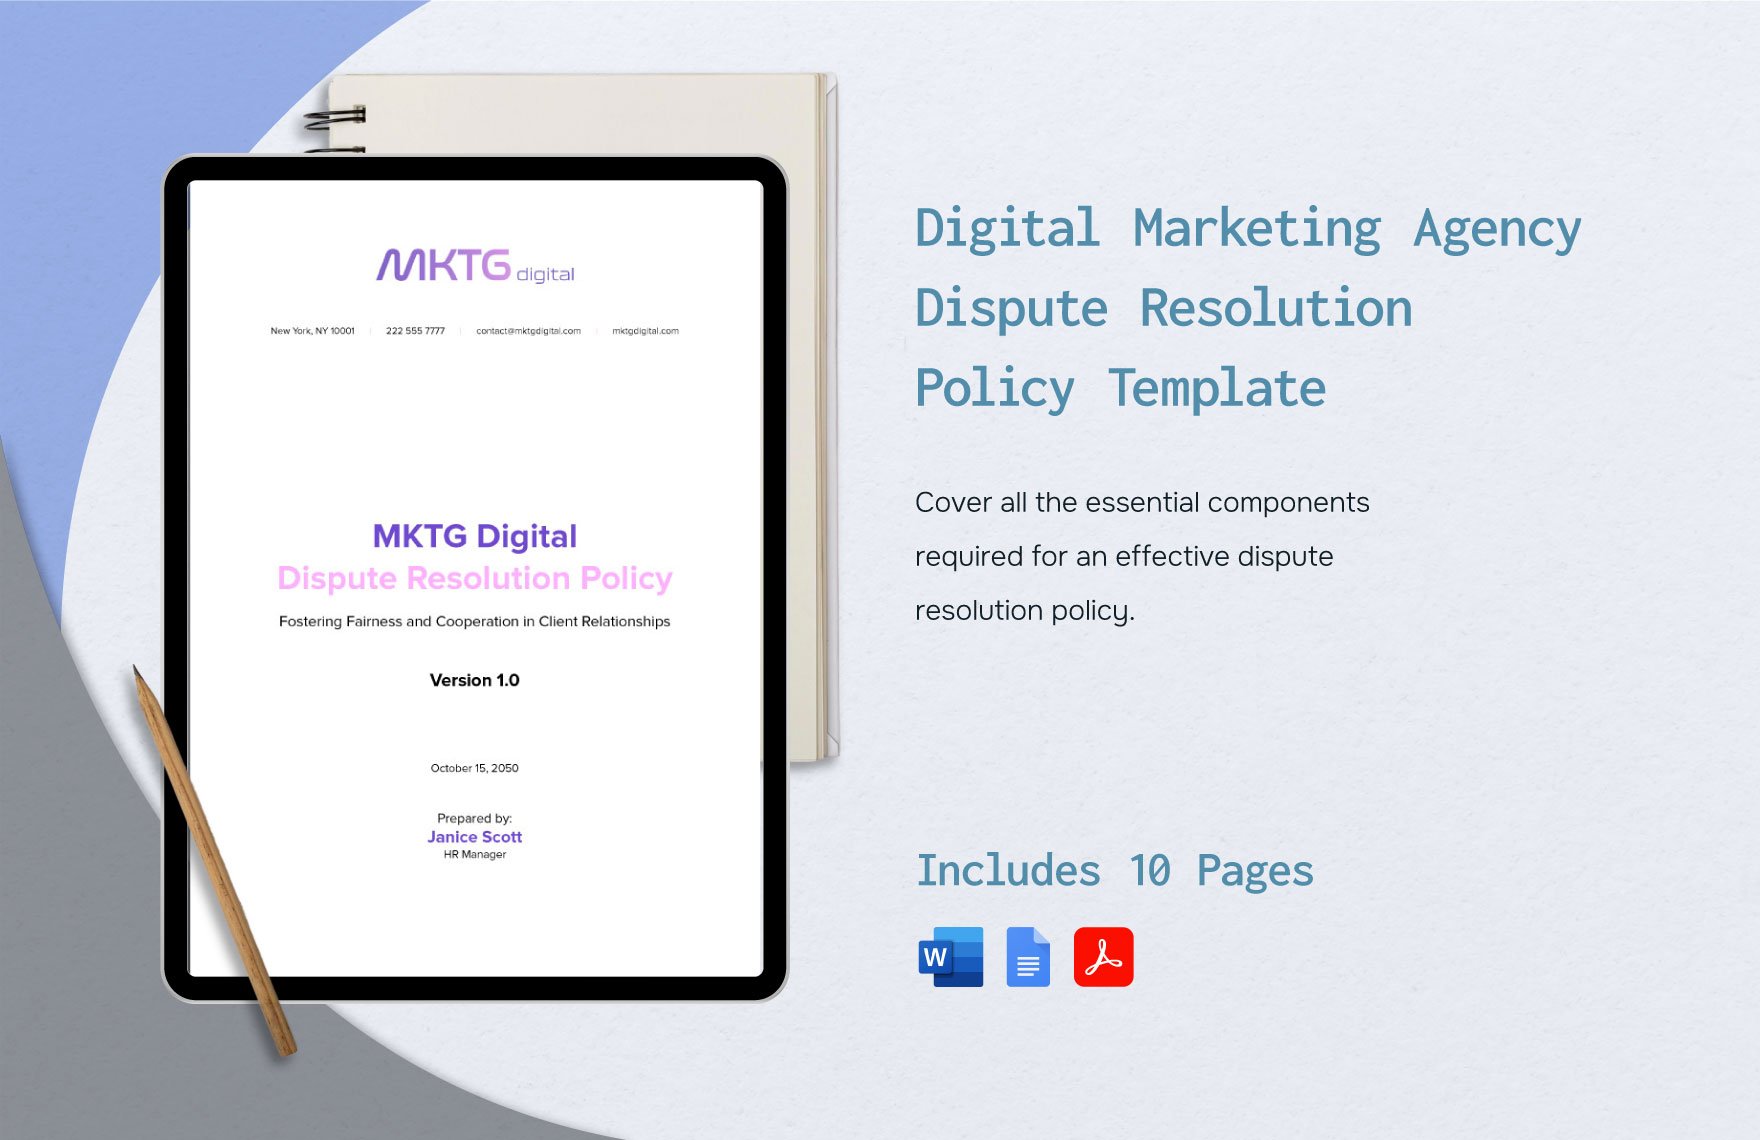 Digital Marketing Agency Dispute Resolution Policy Template